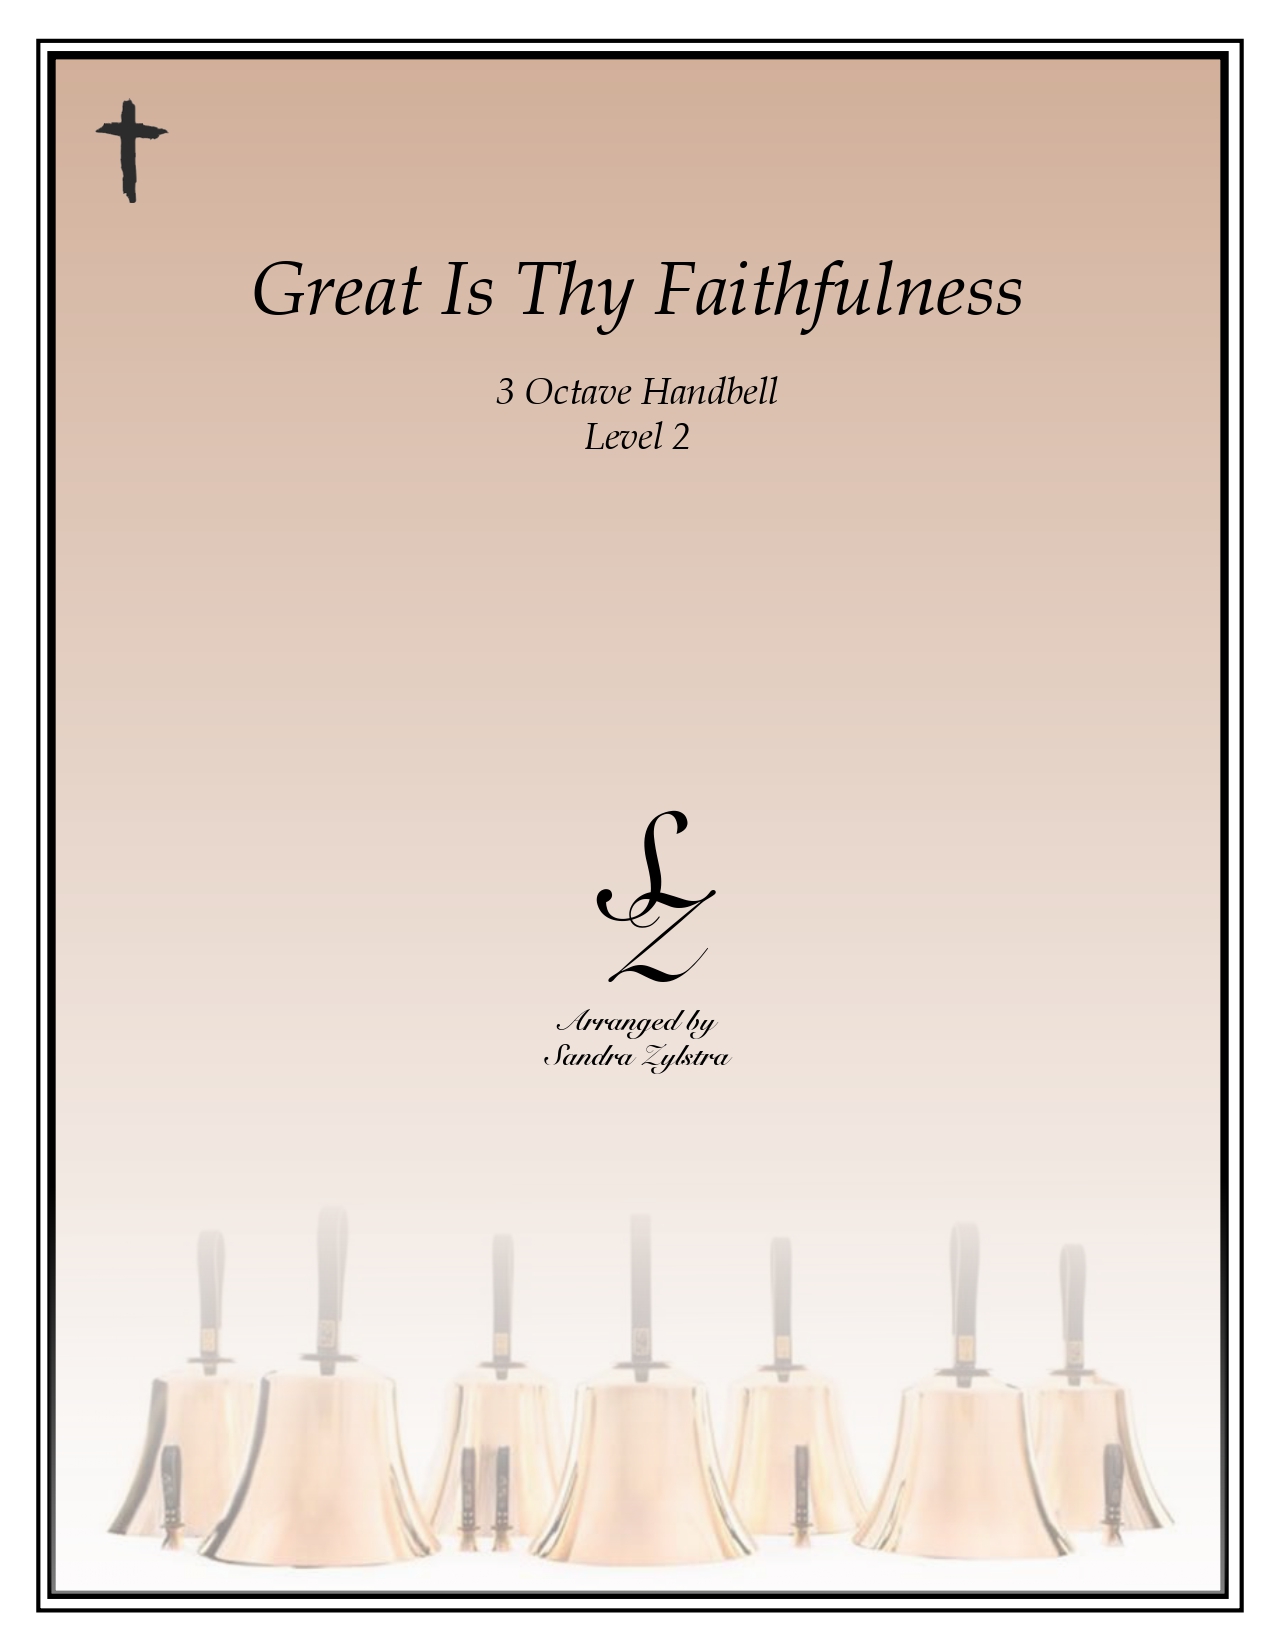 Great Is Thy Faithfulness handbells page 00011